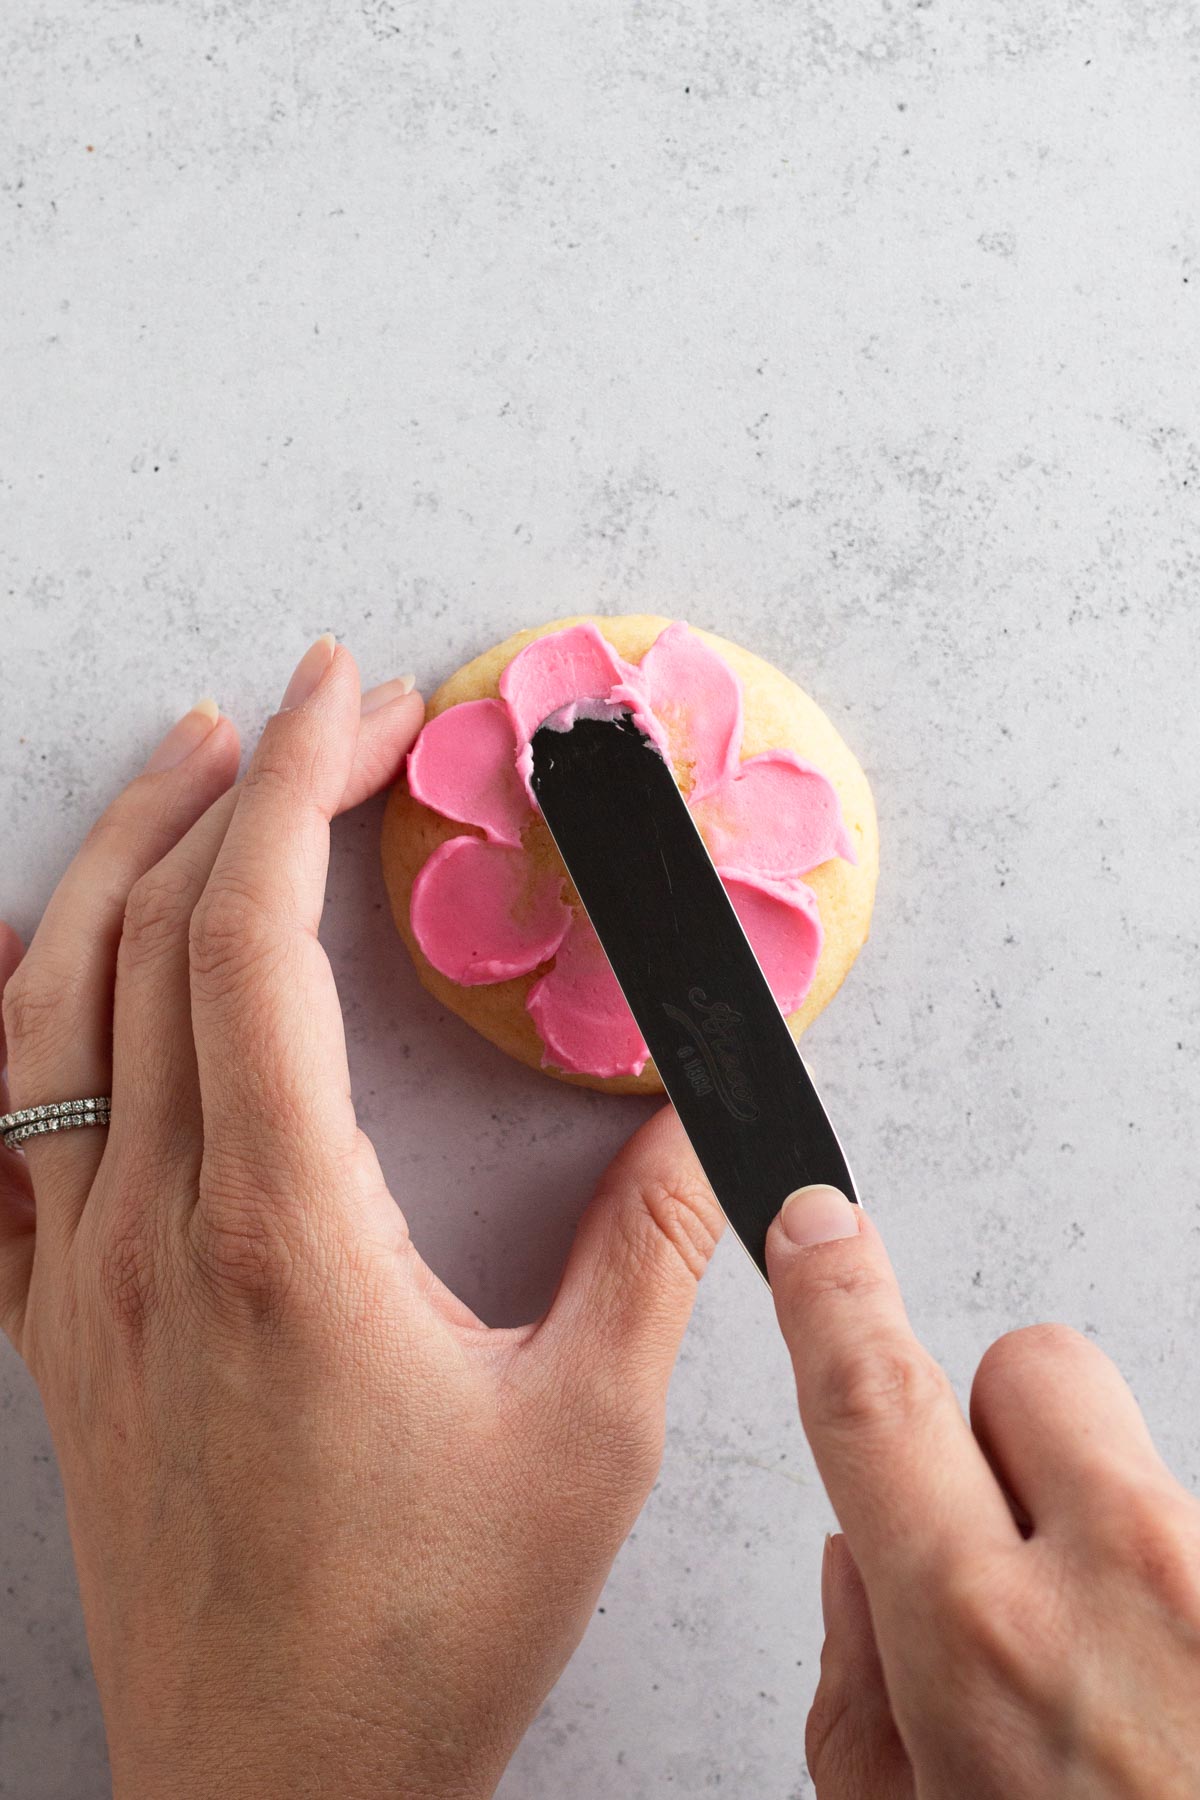 Hands using flat spatula to "paint" pink buttercream flower petals onto a sugar cookie.